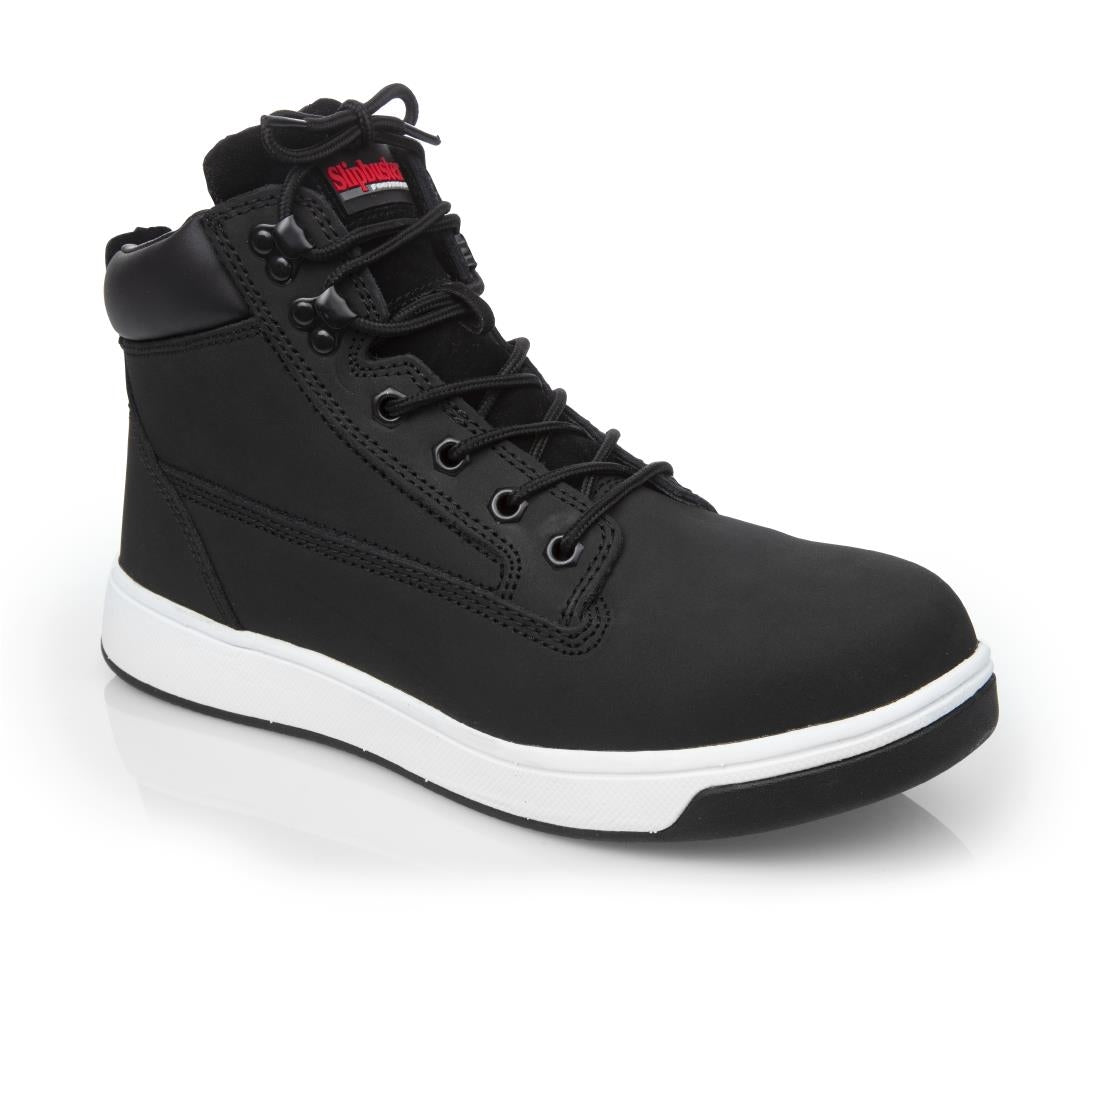 BB422-38 Slipbuster Sneaker Boots Black 38 JD Catering Equipment Solutions Ltd